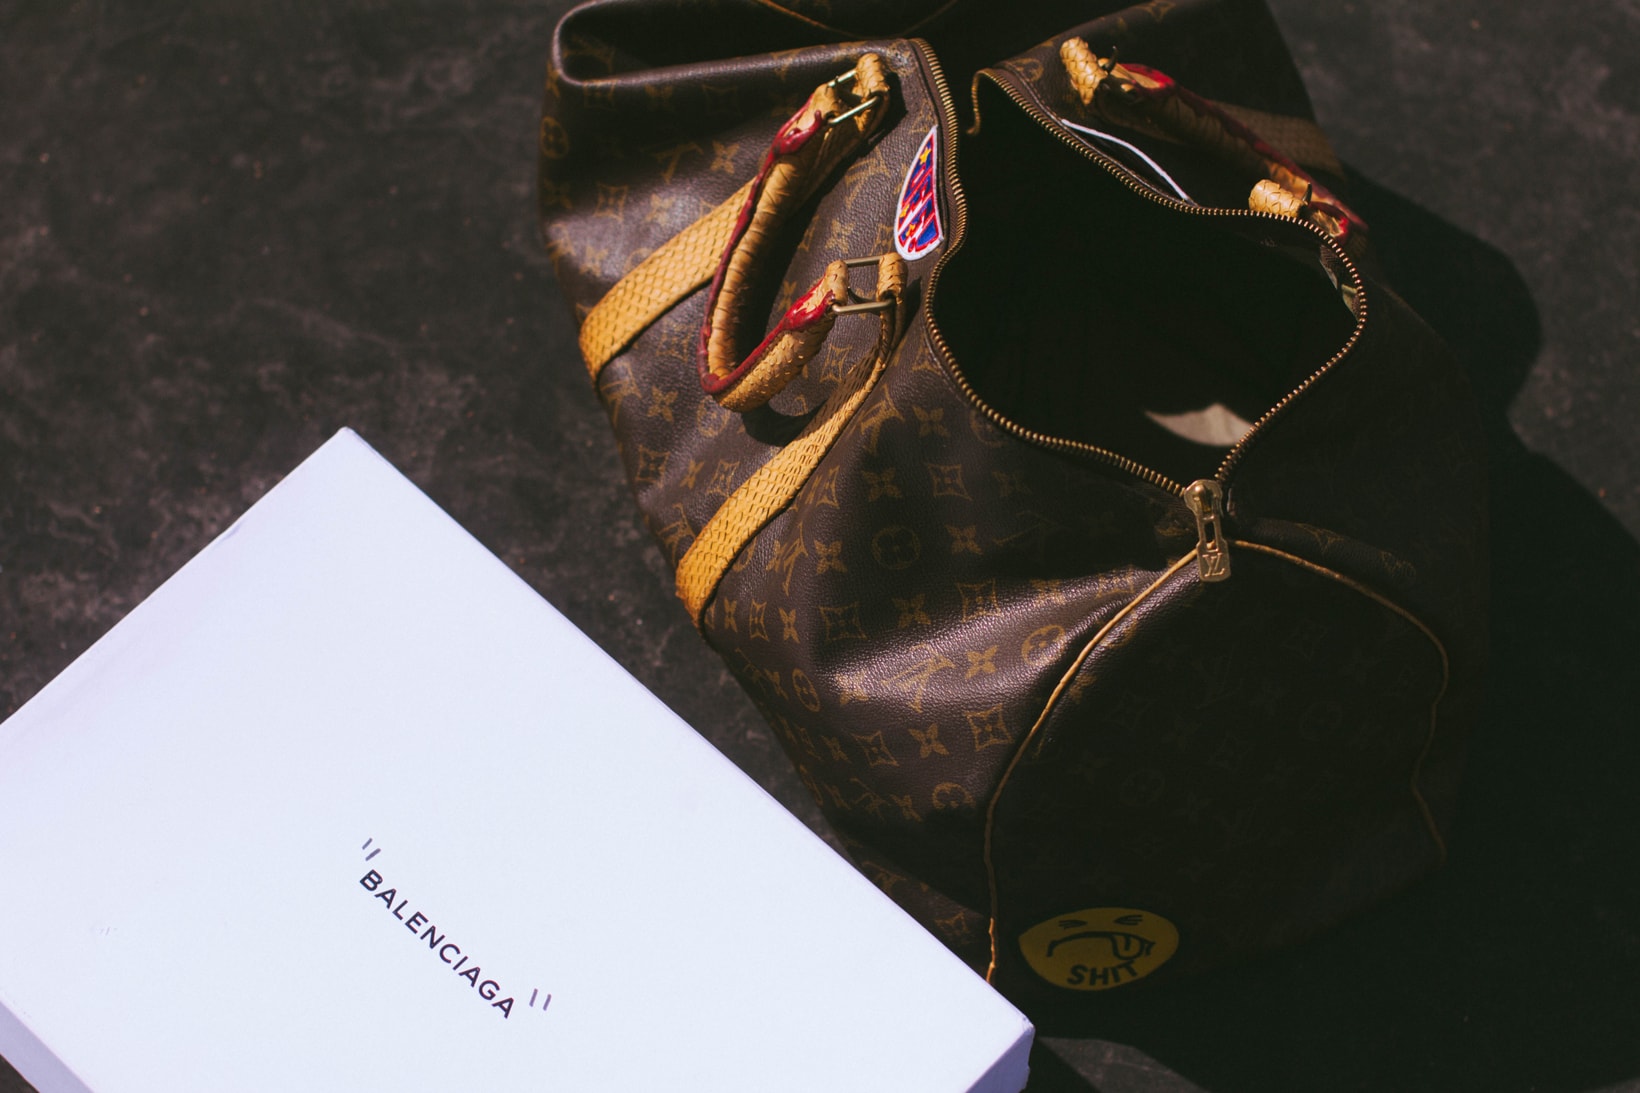 Balenciaga's designer explains his Triple S sneakers and replica Ikea bag